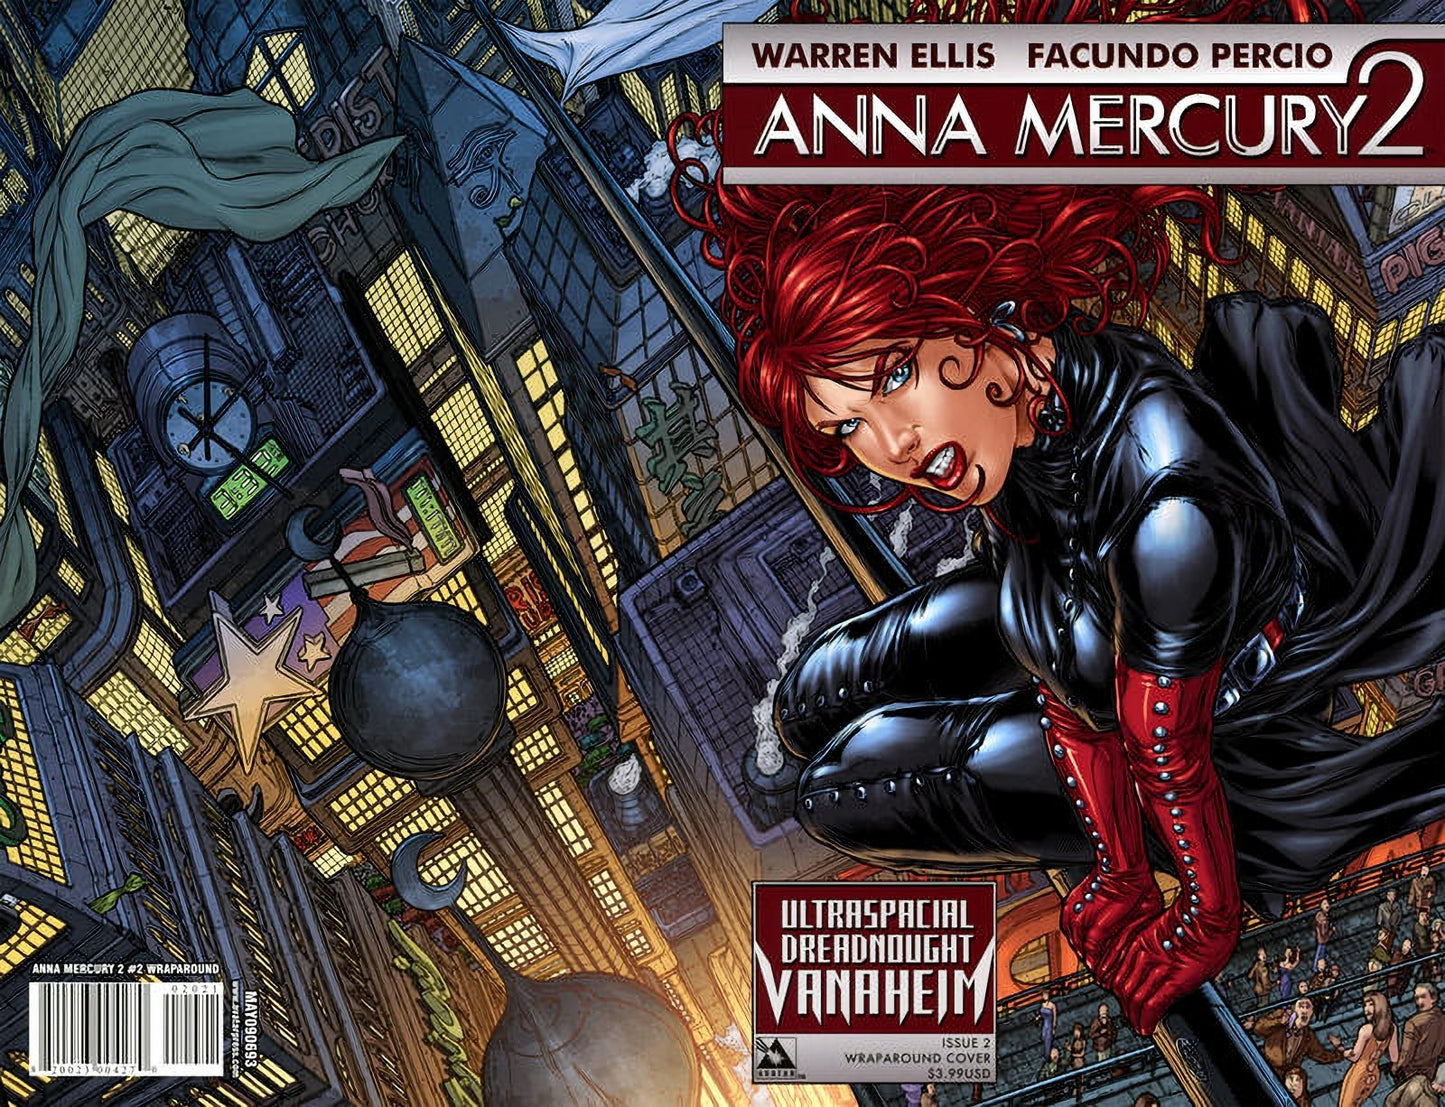 Anna Mercury 2 #2 Wrap Cover (2009) Avatar Press Comics